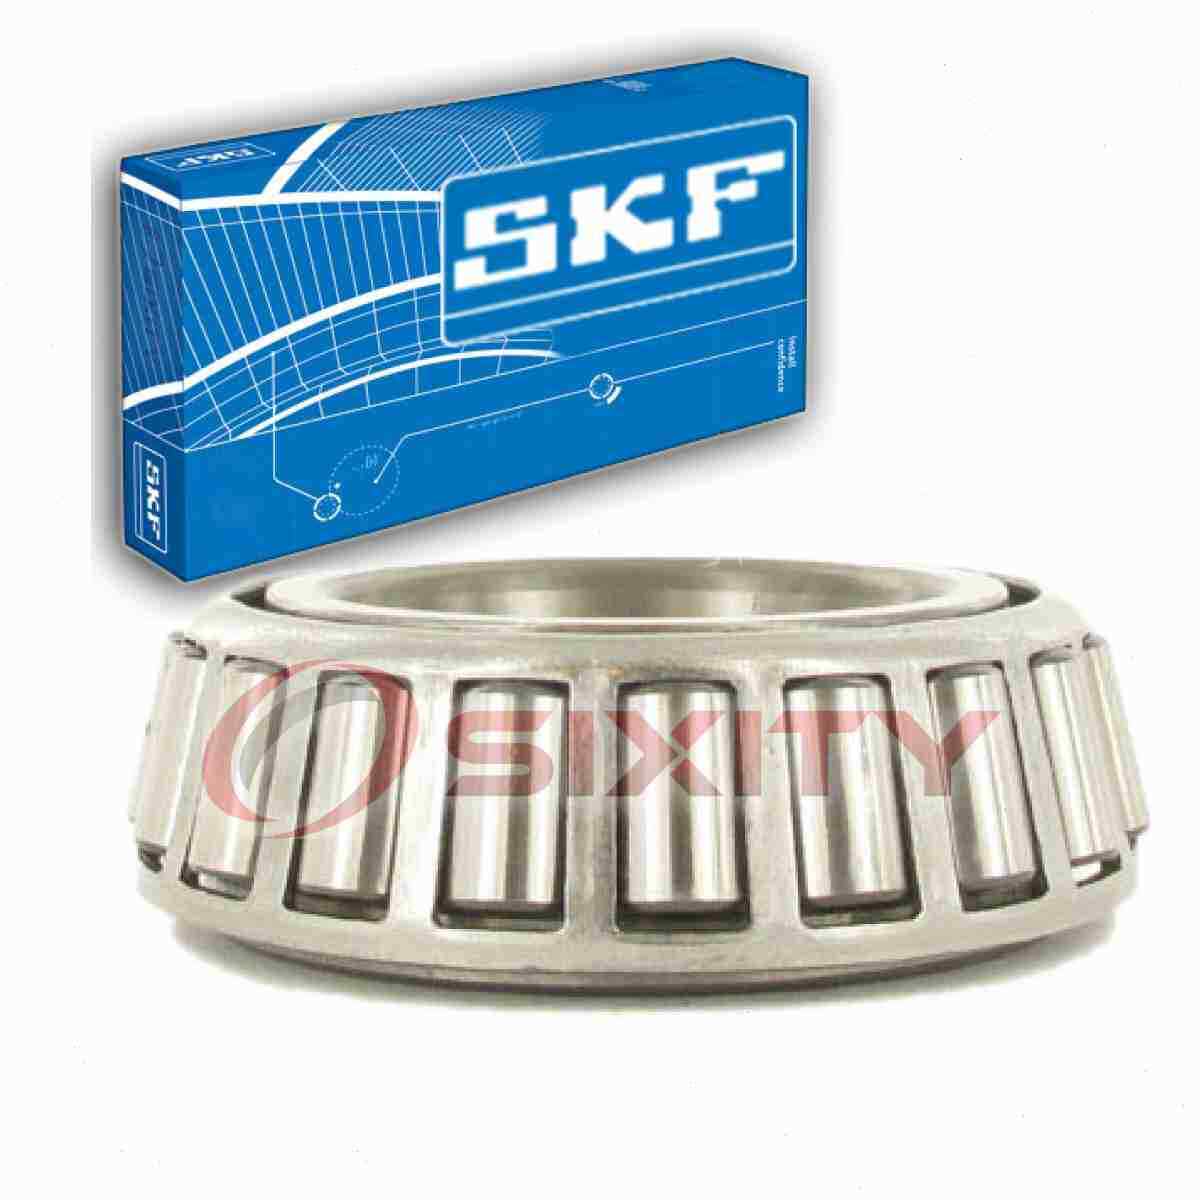 SKF Rear Inner Wheel Bearing for 1988-1993 Ford Festiva Axle Drivetrain db